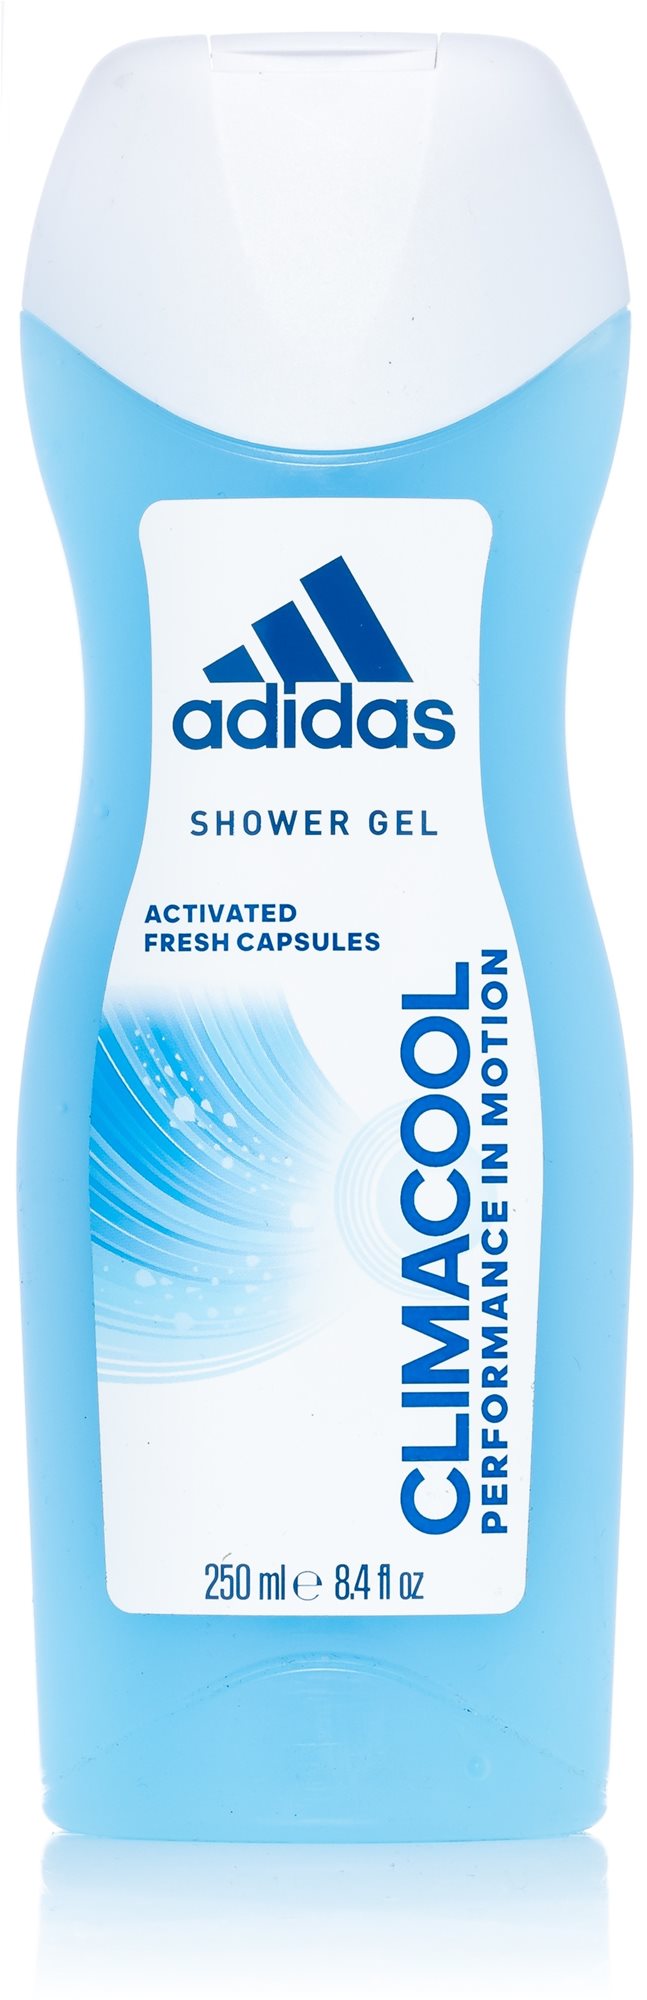 Adidas Climacool - tusfürdő 250 ml